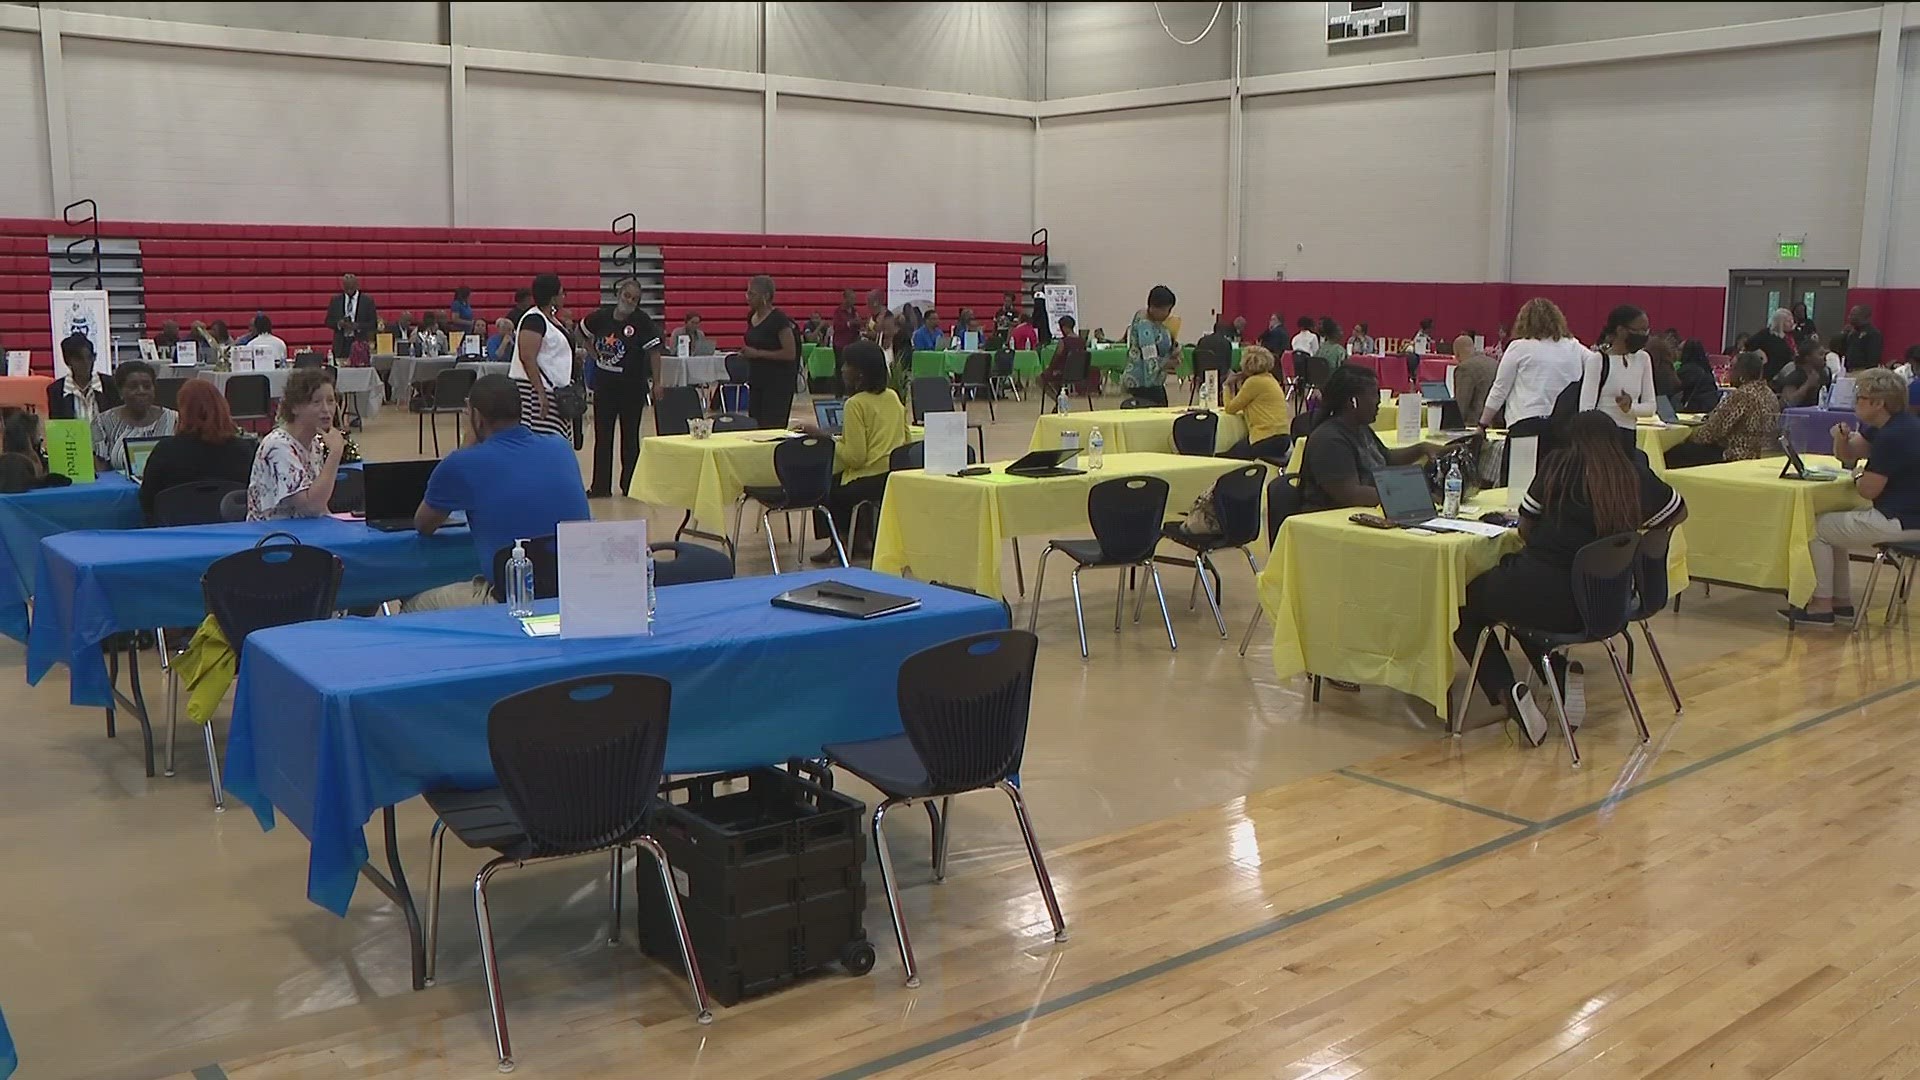 Amid a nationwide teacher shortage, hundreds of job applicants flood a metro Atlanta school district's job fair.